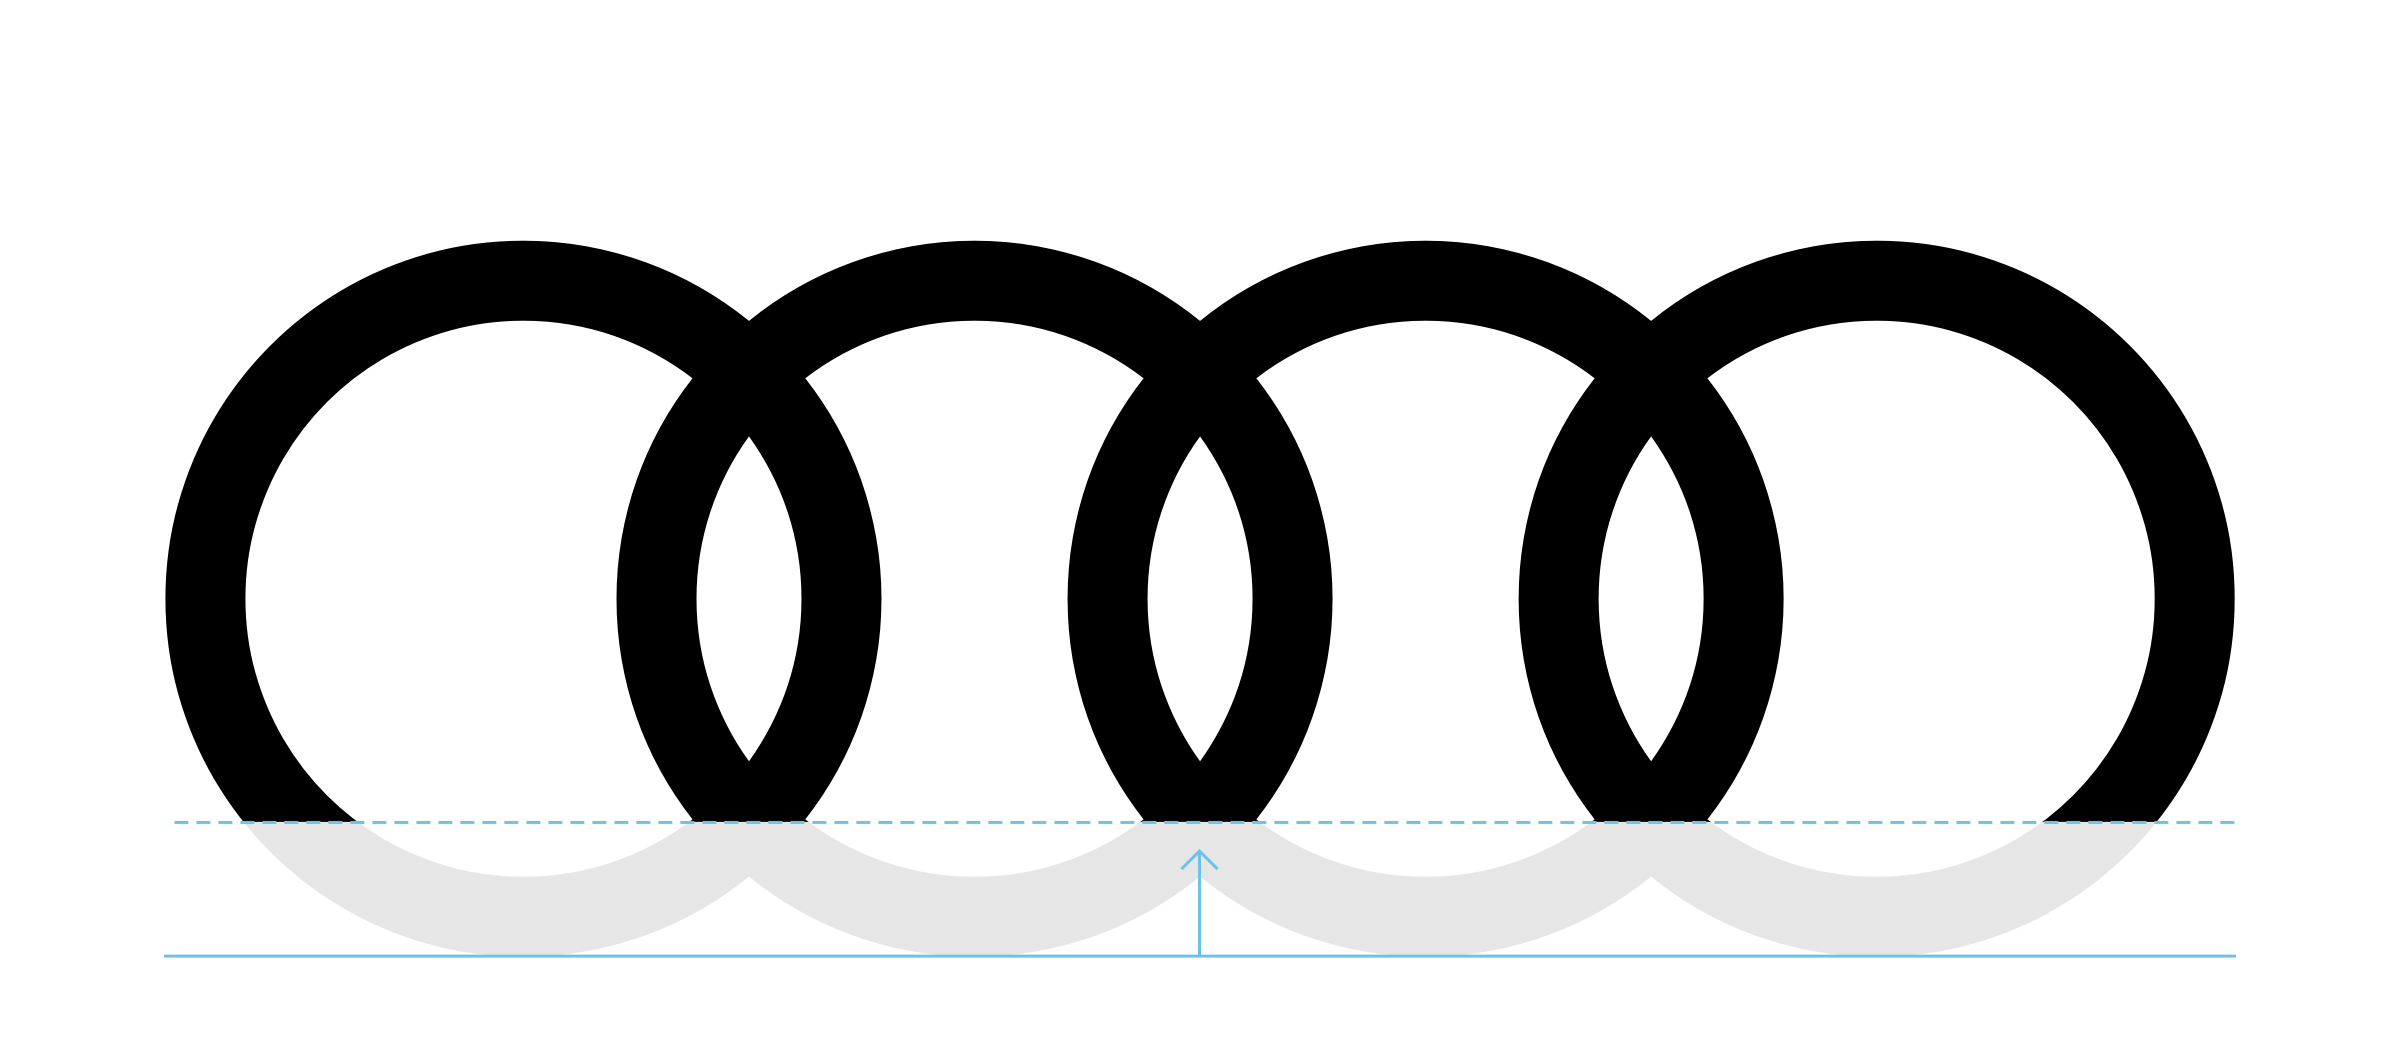 Audi Rings Logo PNG Transparent & SVG Vector - Freebie Supply, audi logo 